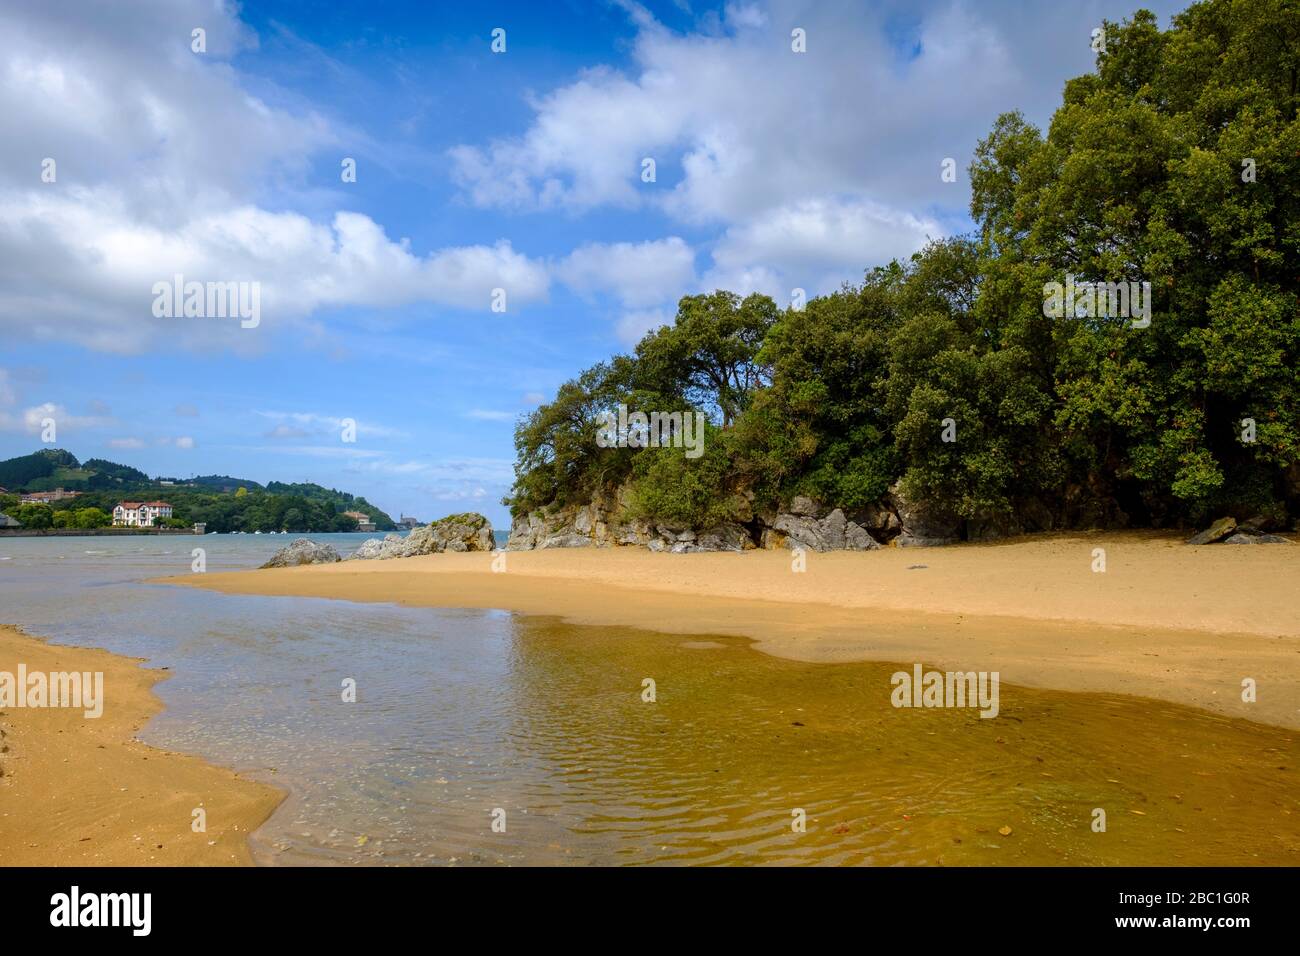 Playa San Antonio, Meeresarm von Urdaibai, Mundakako, Biosphärenreservat Urdaibai, bei Gernika, Baskenland, Provinz Bizkaia, Provinz Biskaya, Nordspan Stock Photo